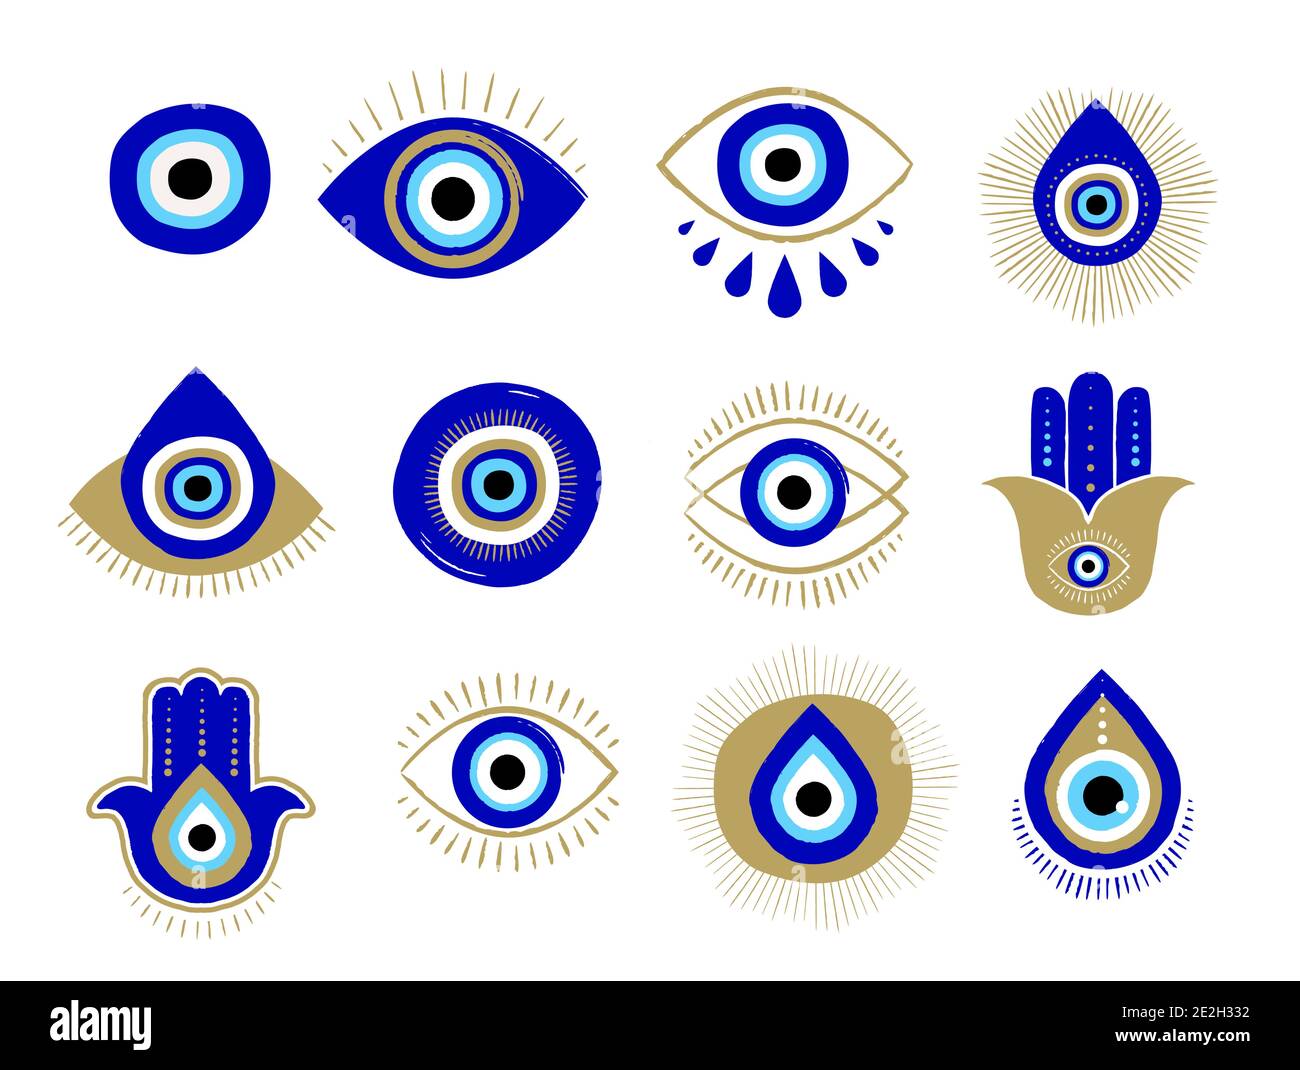 medianoche Dictar Odio Se han establecido símbolos e iconos de ojo maligno o ojo turco. Diseño  moderno de amuletos y decoración de casa idea Imagen Vector de stock - Alamy